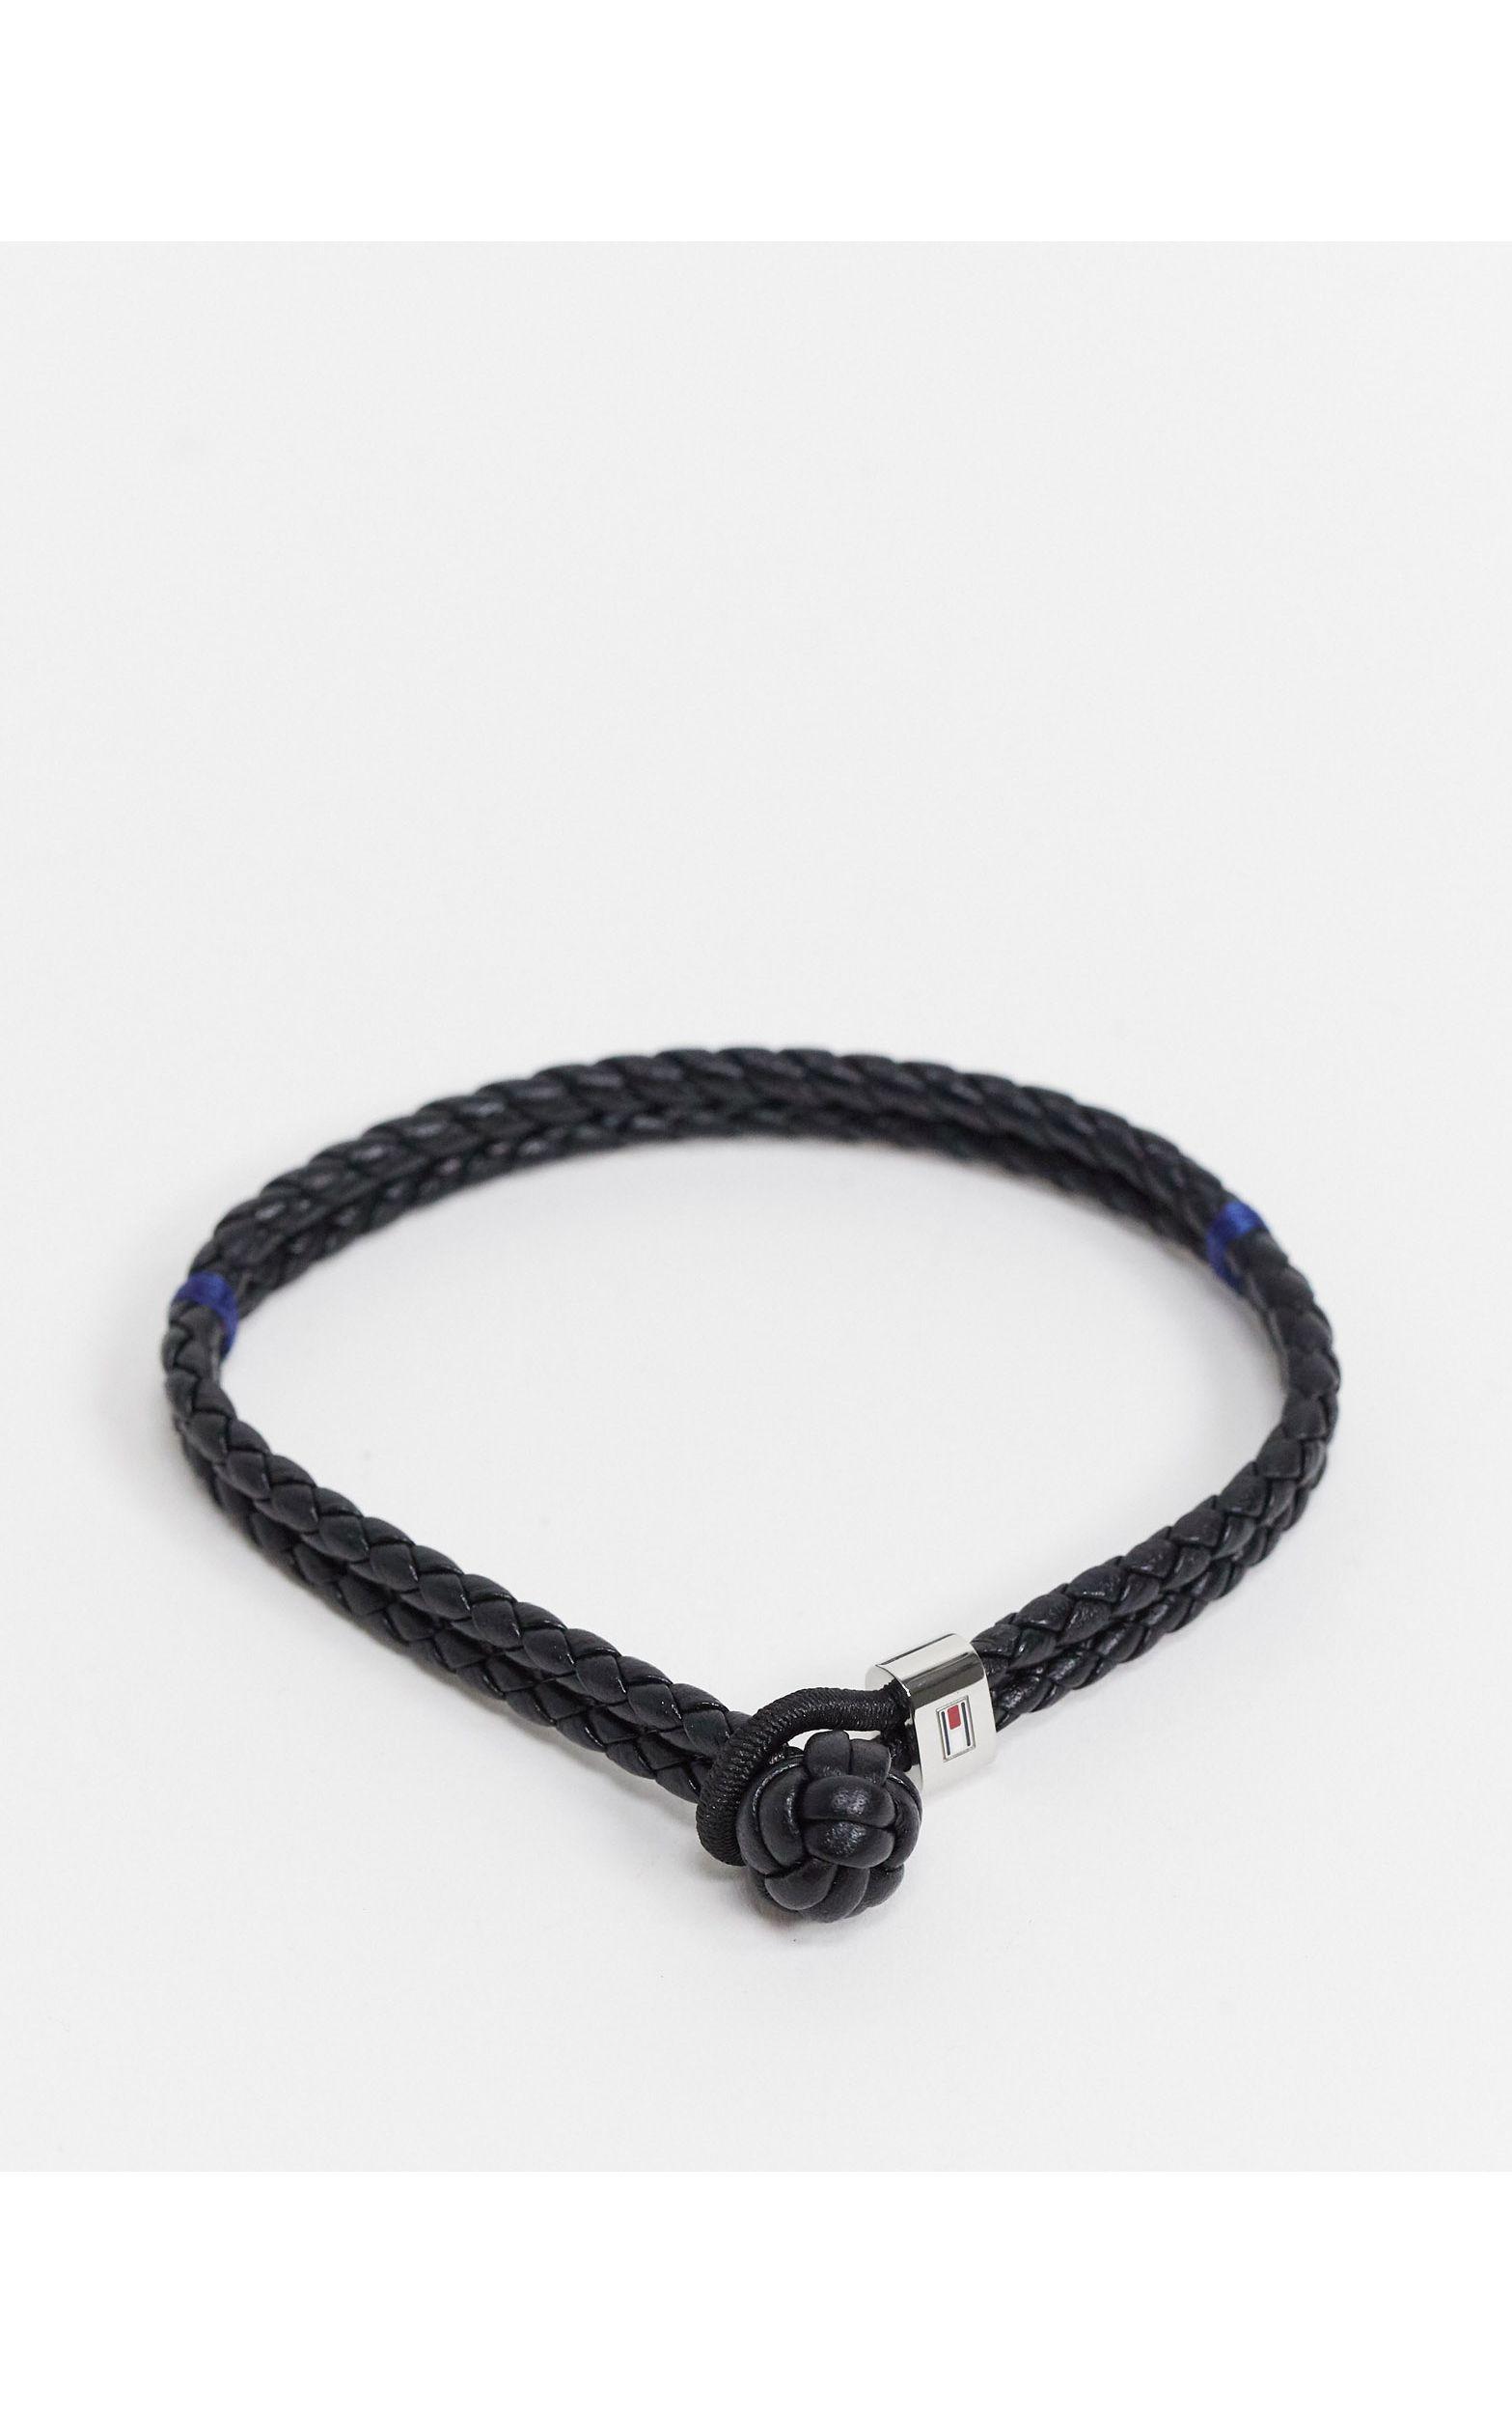 tommy hilfiger knotted leather bracelet